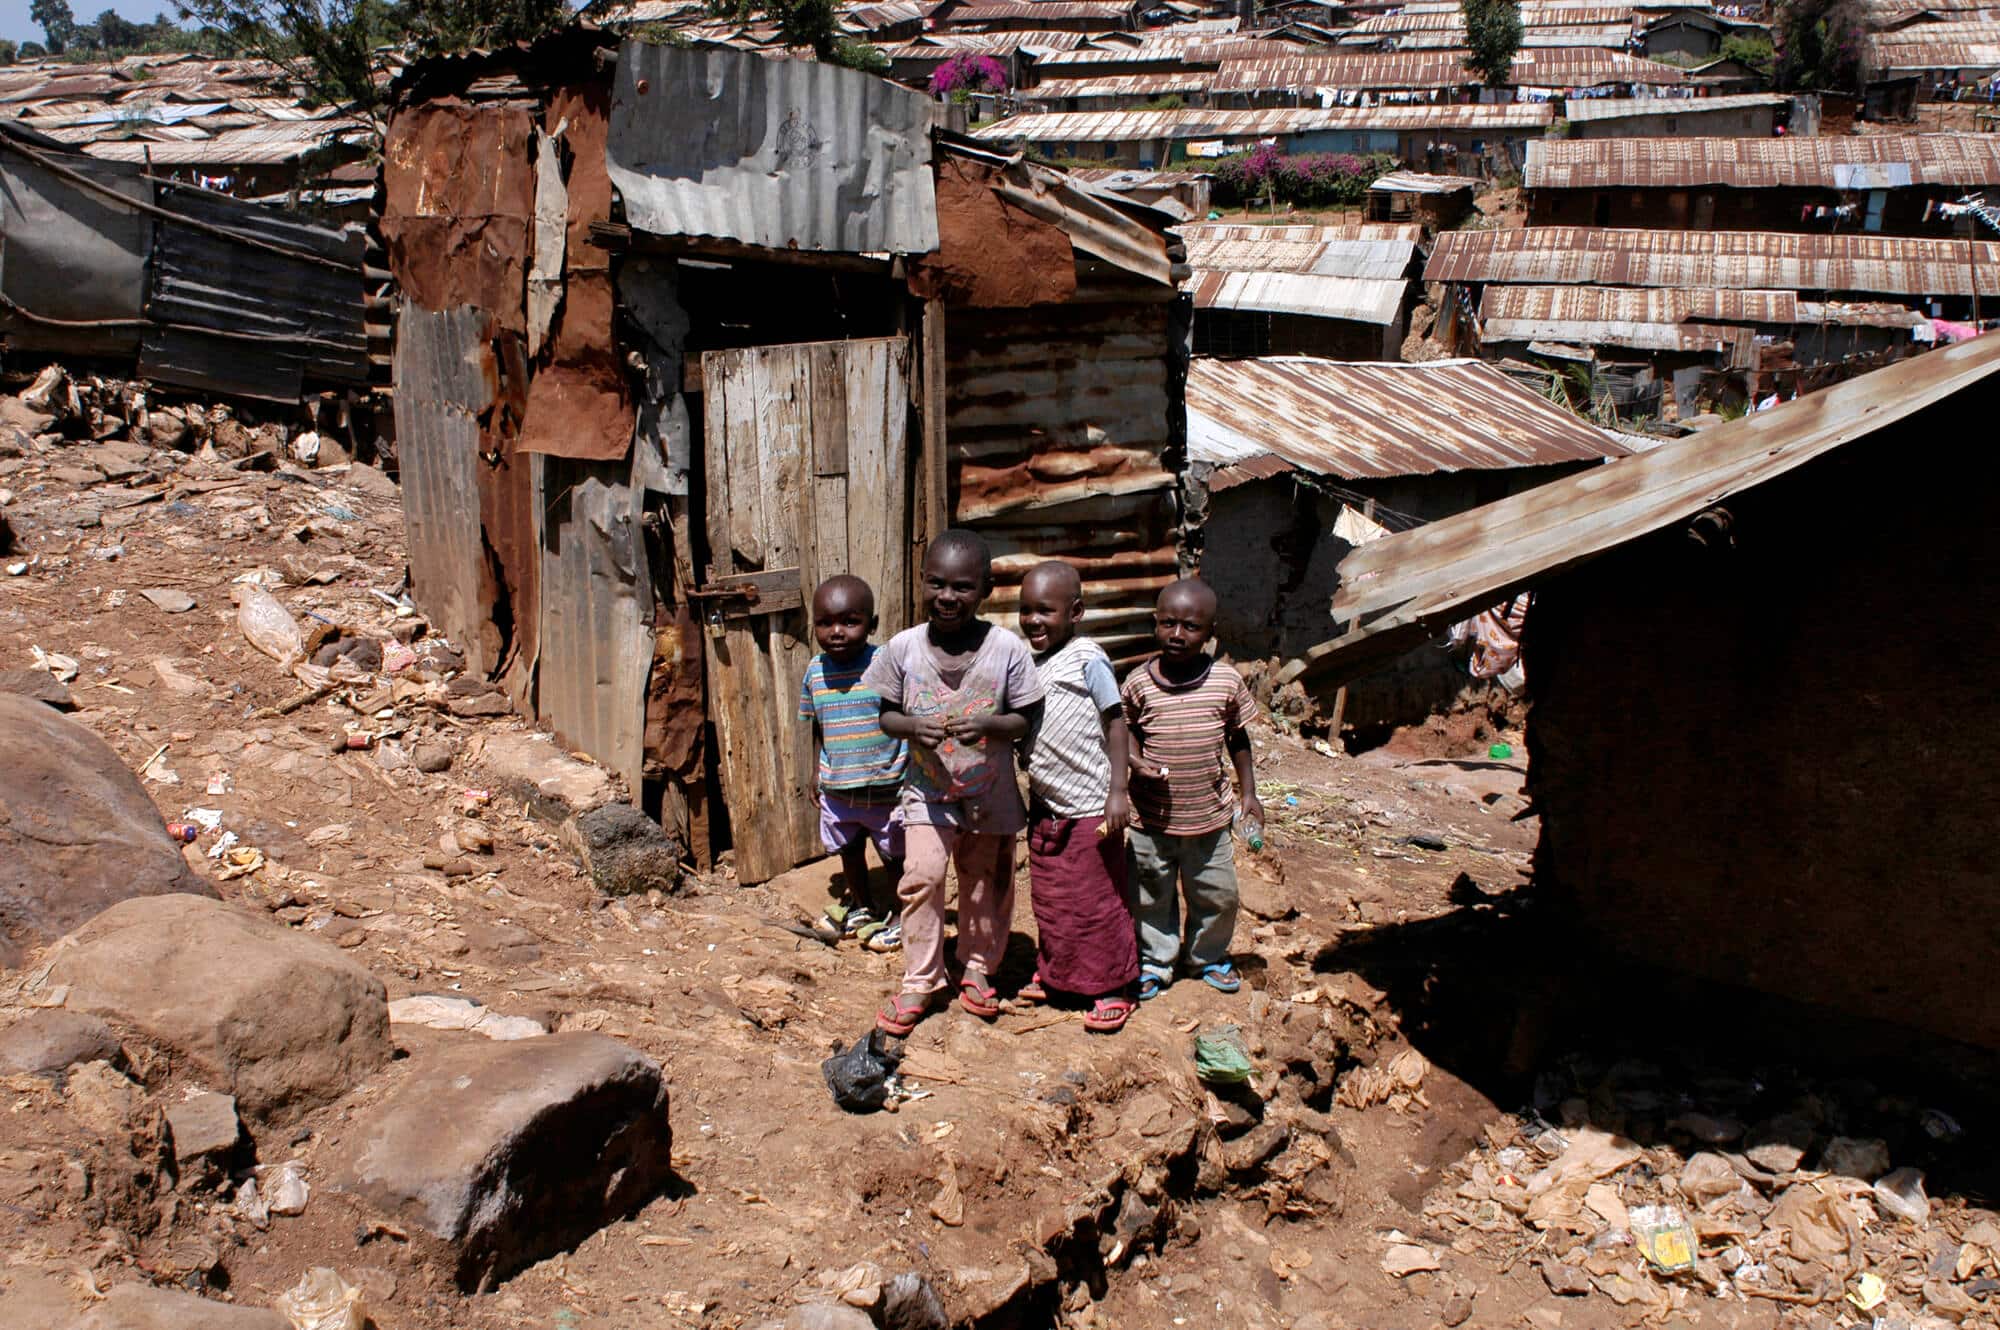 Children in a slum in Nairobi, Kenya. Illustration: depositphotos.com